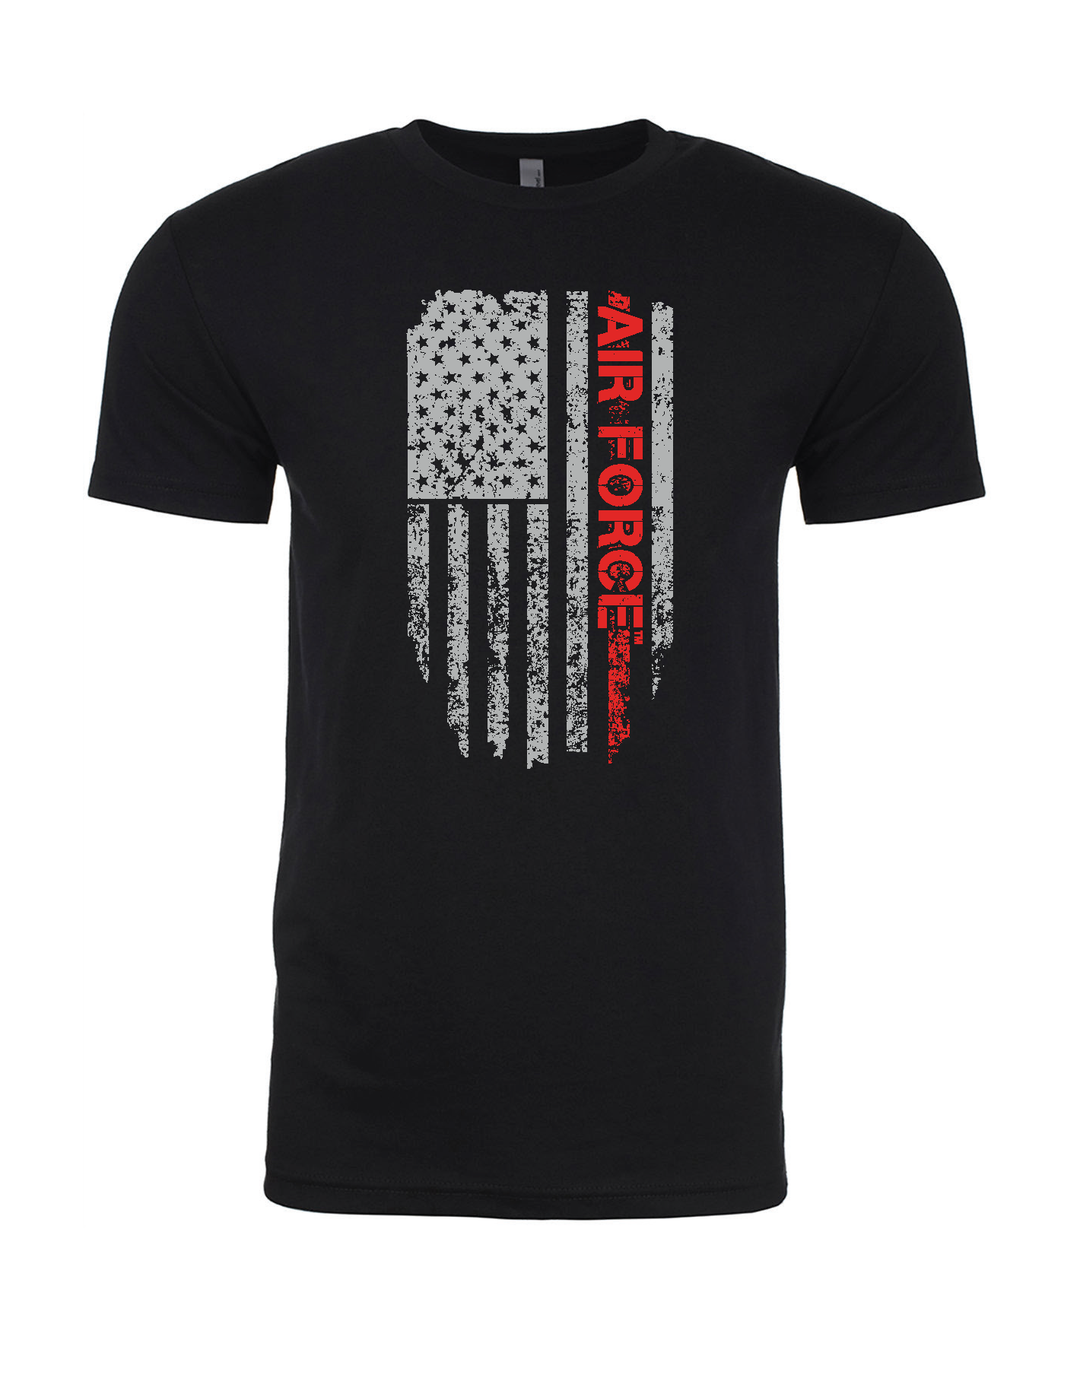 U.S. Air Force Flag T-Shirt (Black)